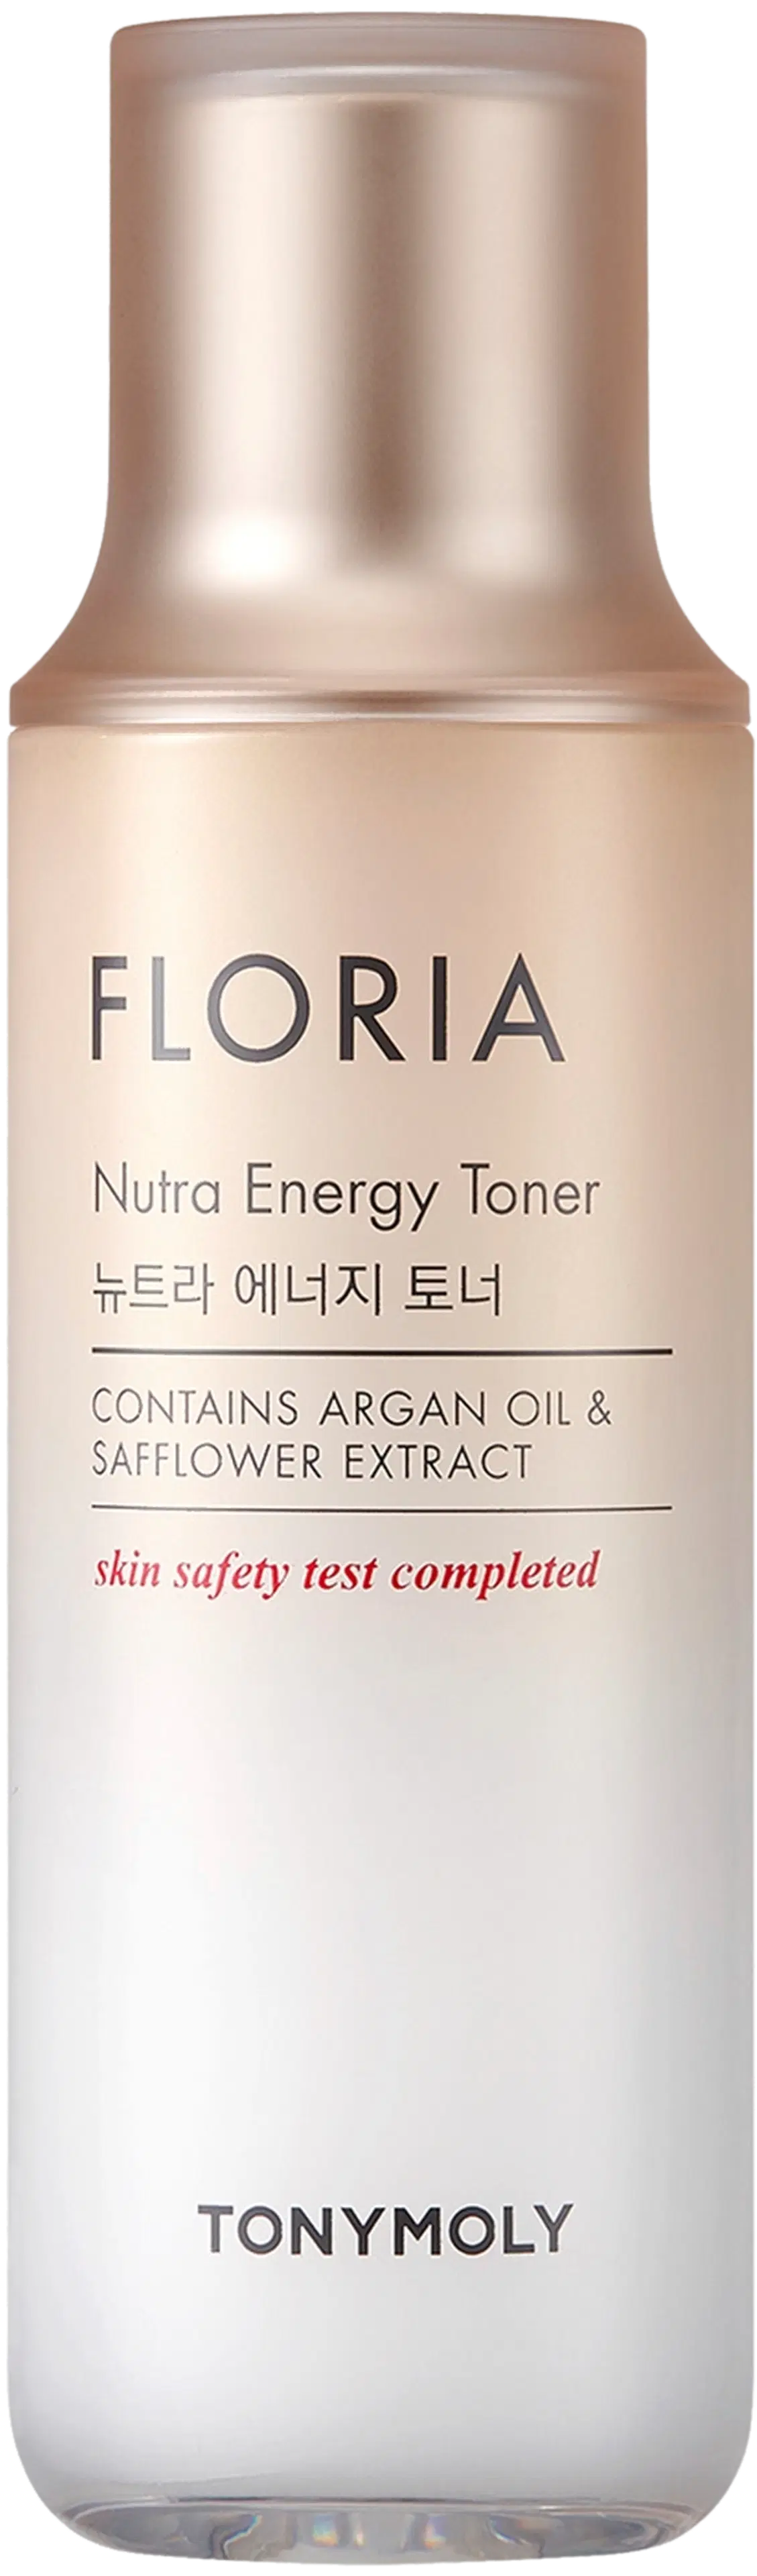 TONYMOLY Floria Nutra Energy Toner kosteuttava kasvovesi 150ml